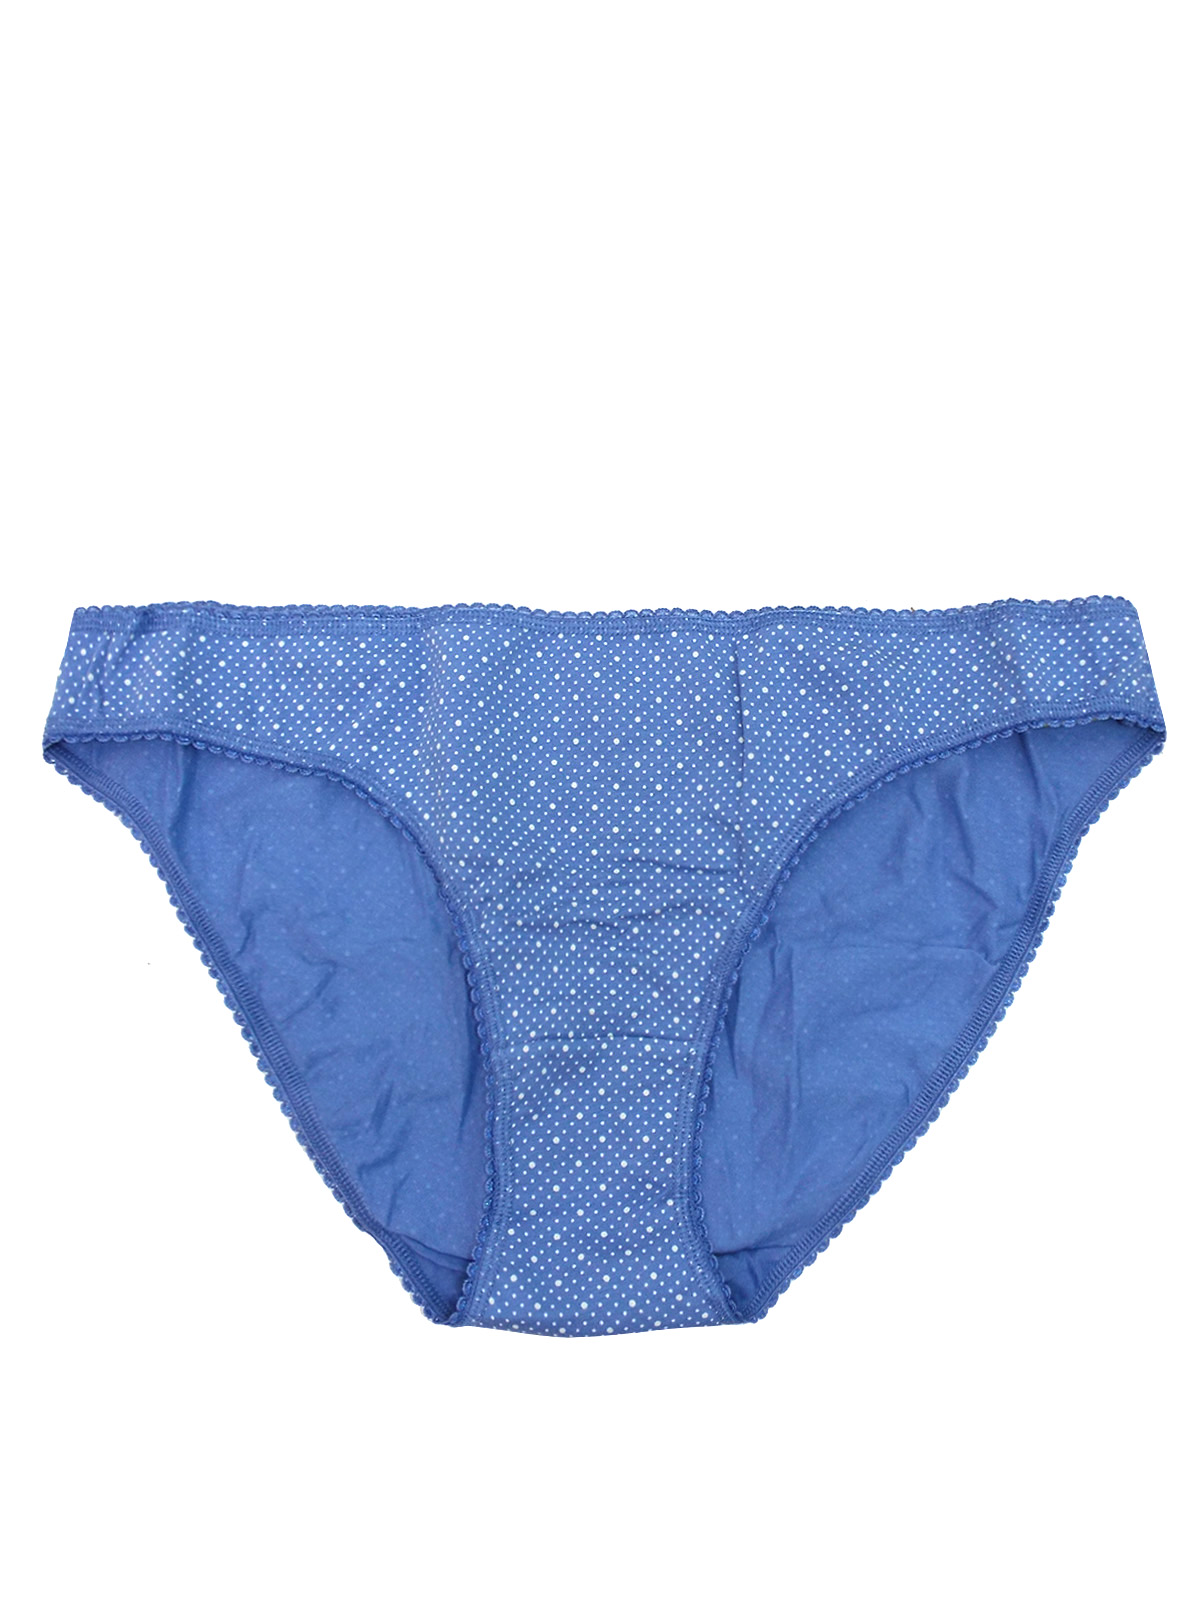 M&S PALE-BLUE Cotton Rich Spotted Trim Bikini Knickers Plus Size 18 to 20 